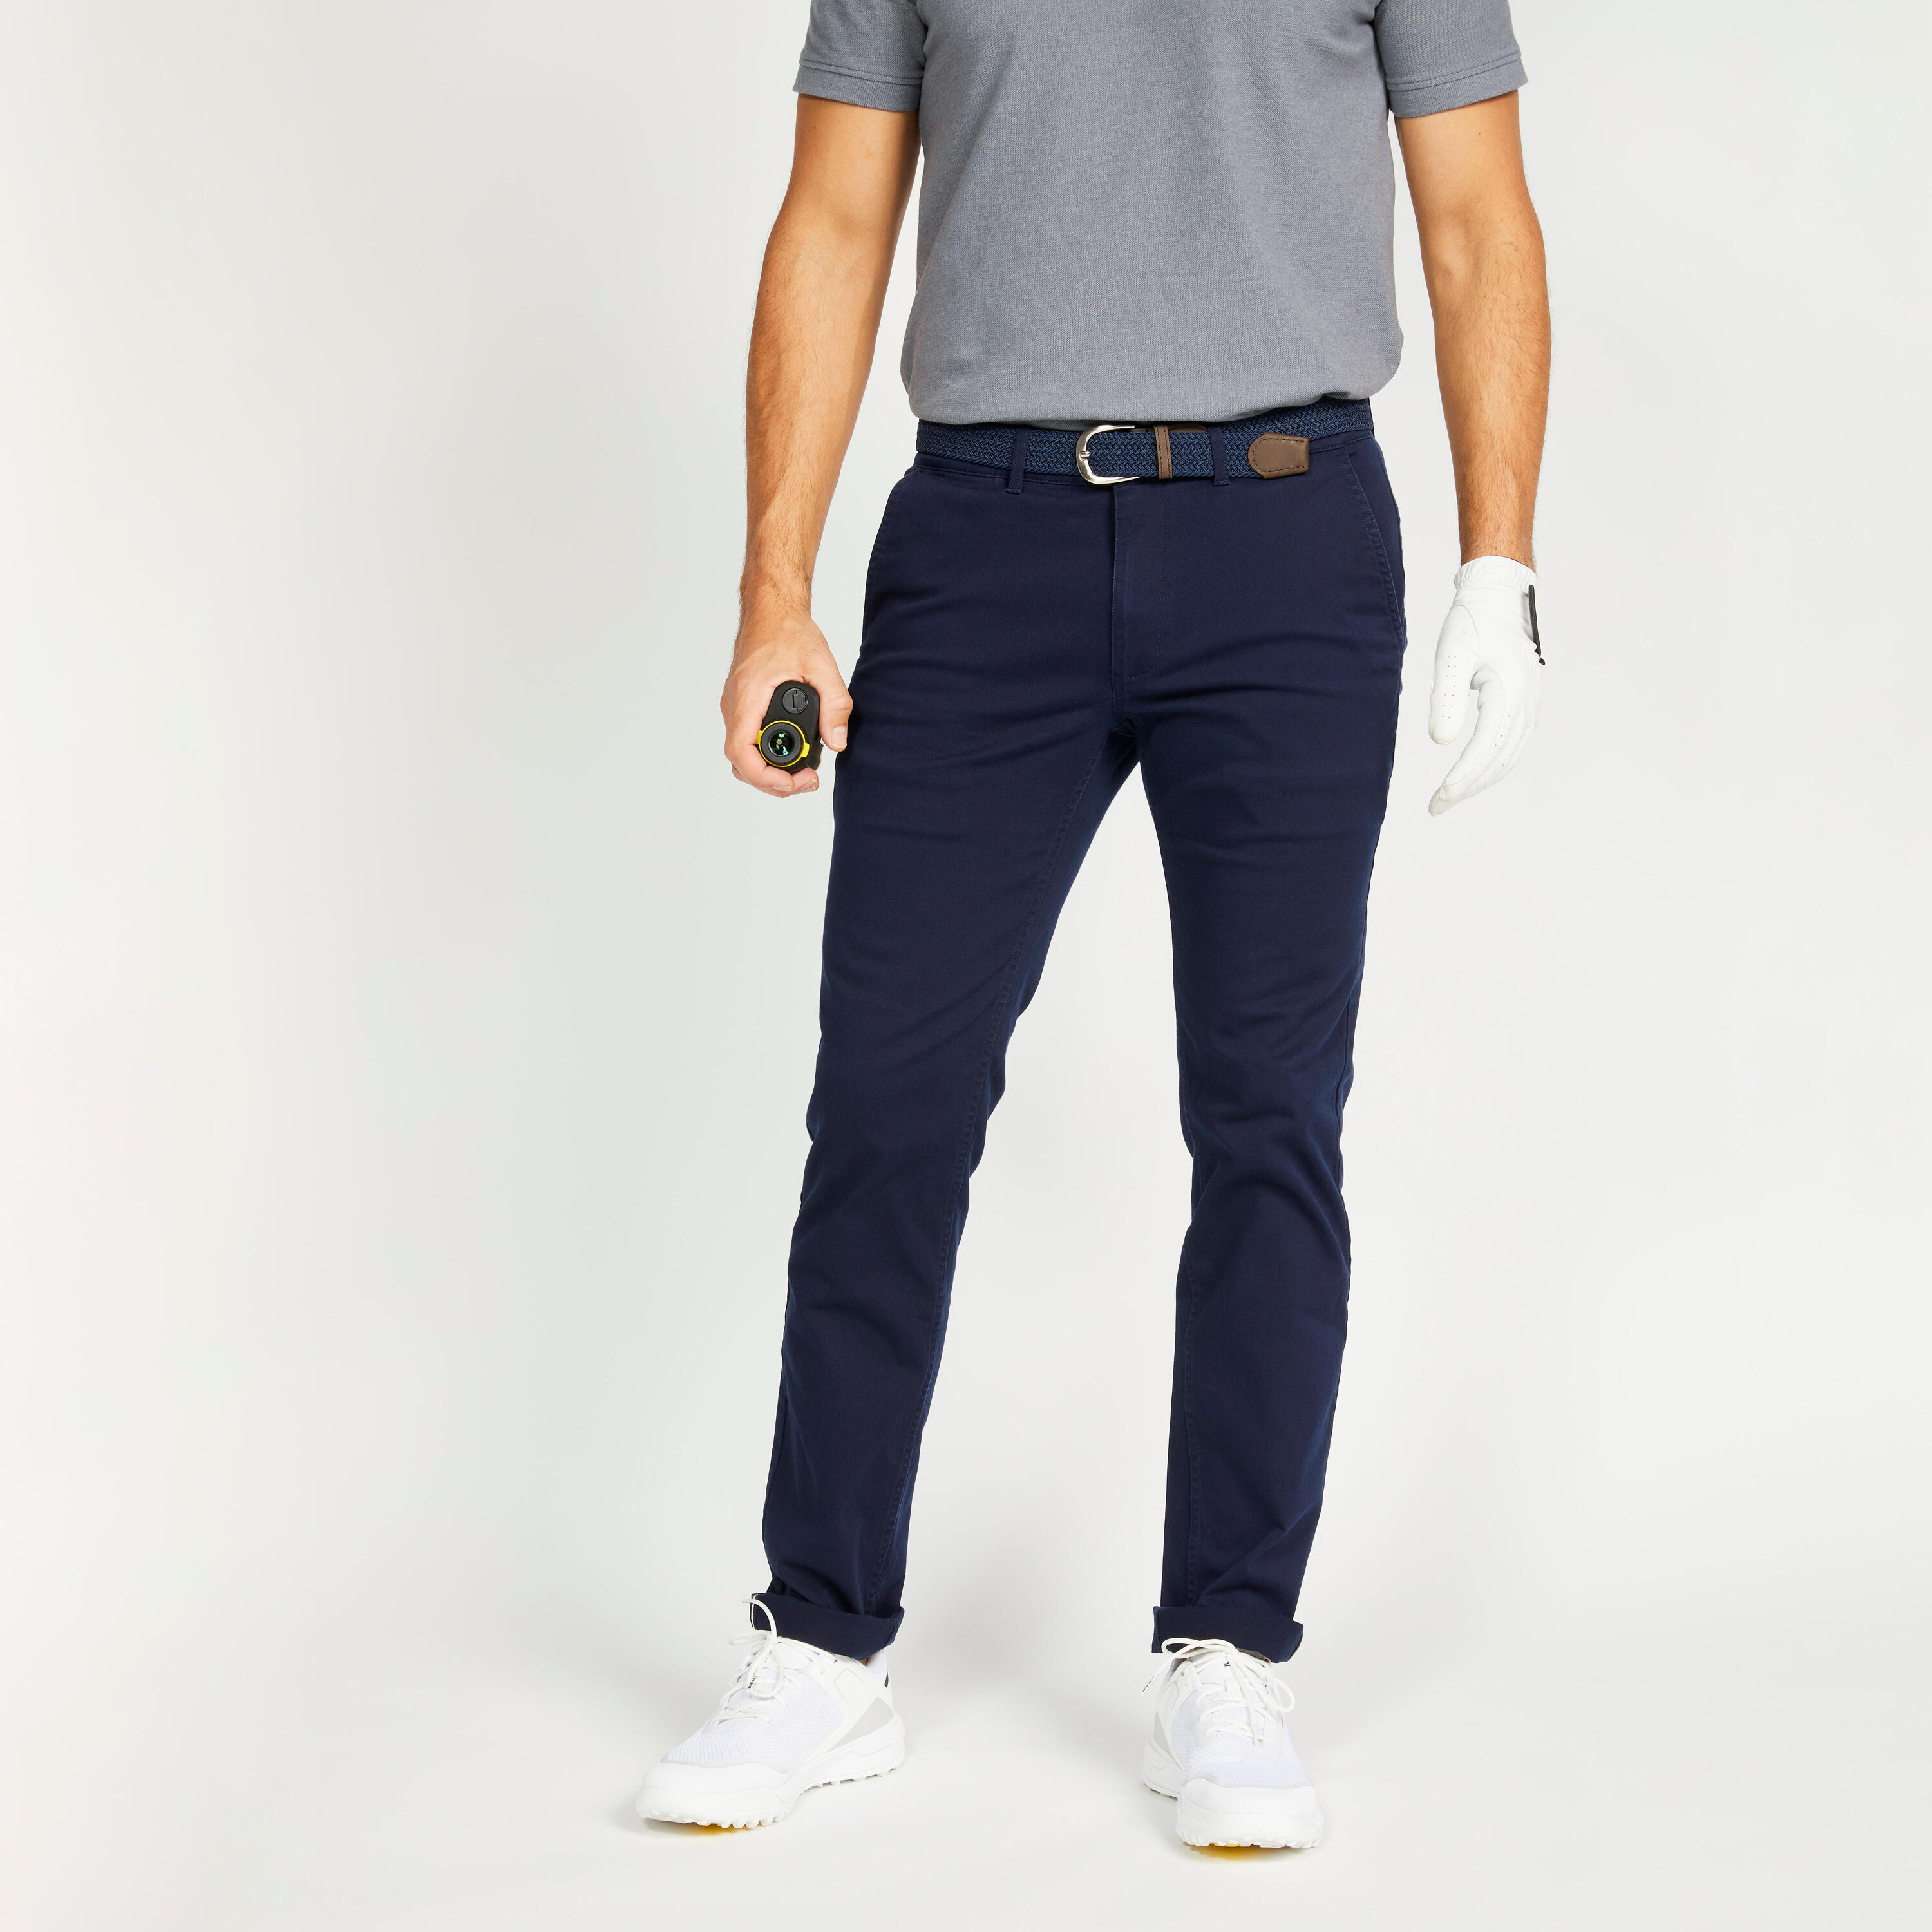 INESIS Men's golf trousers - MW500 navy blue